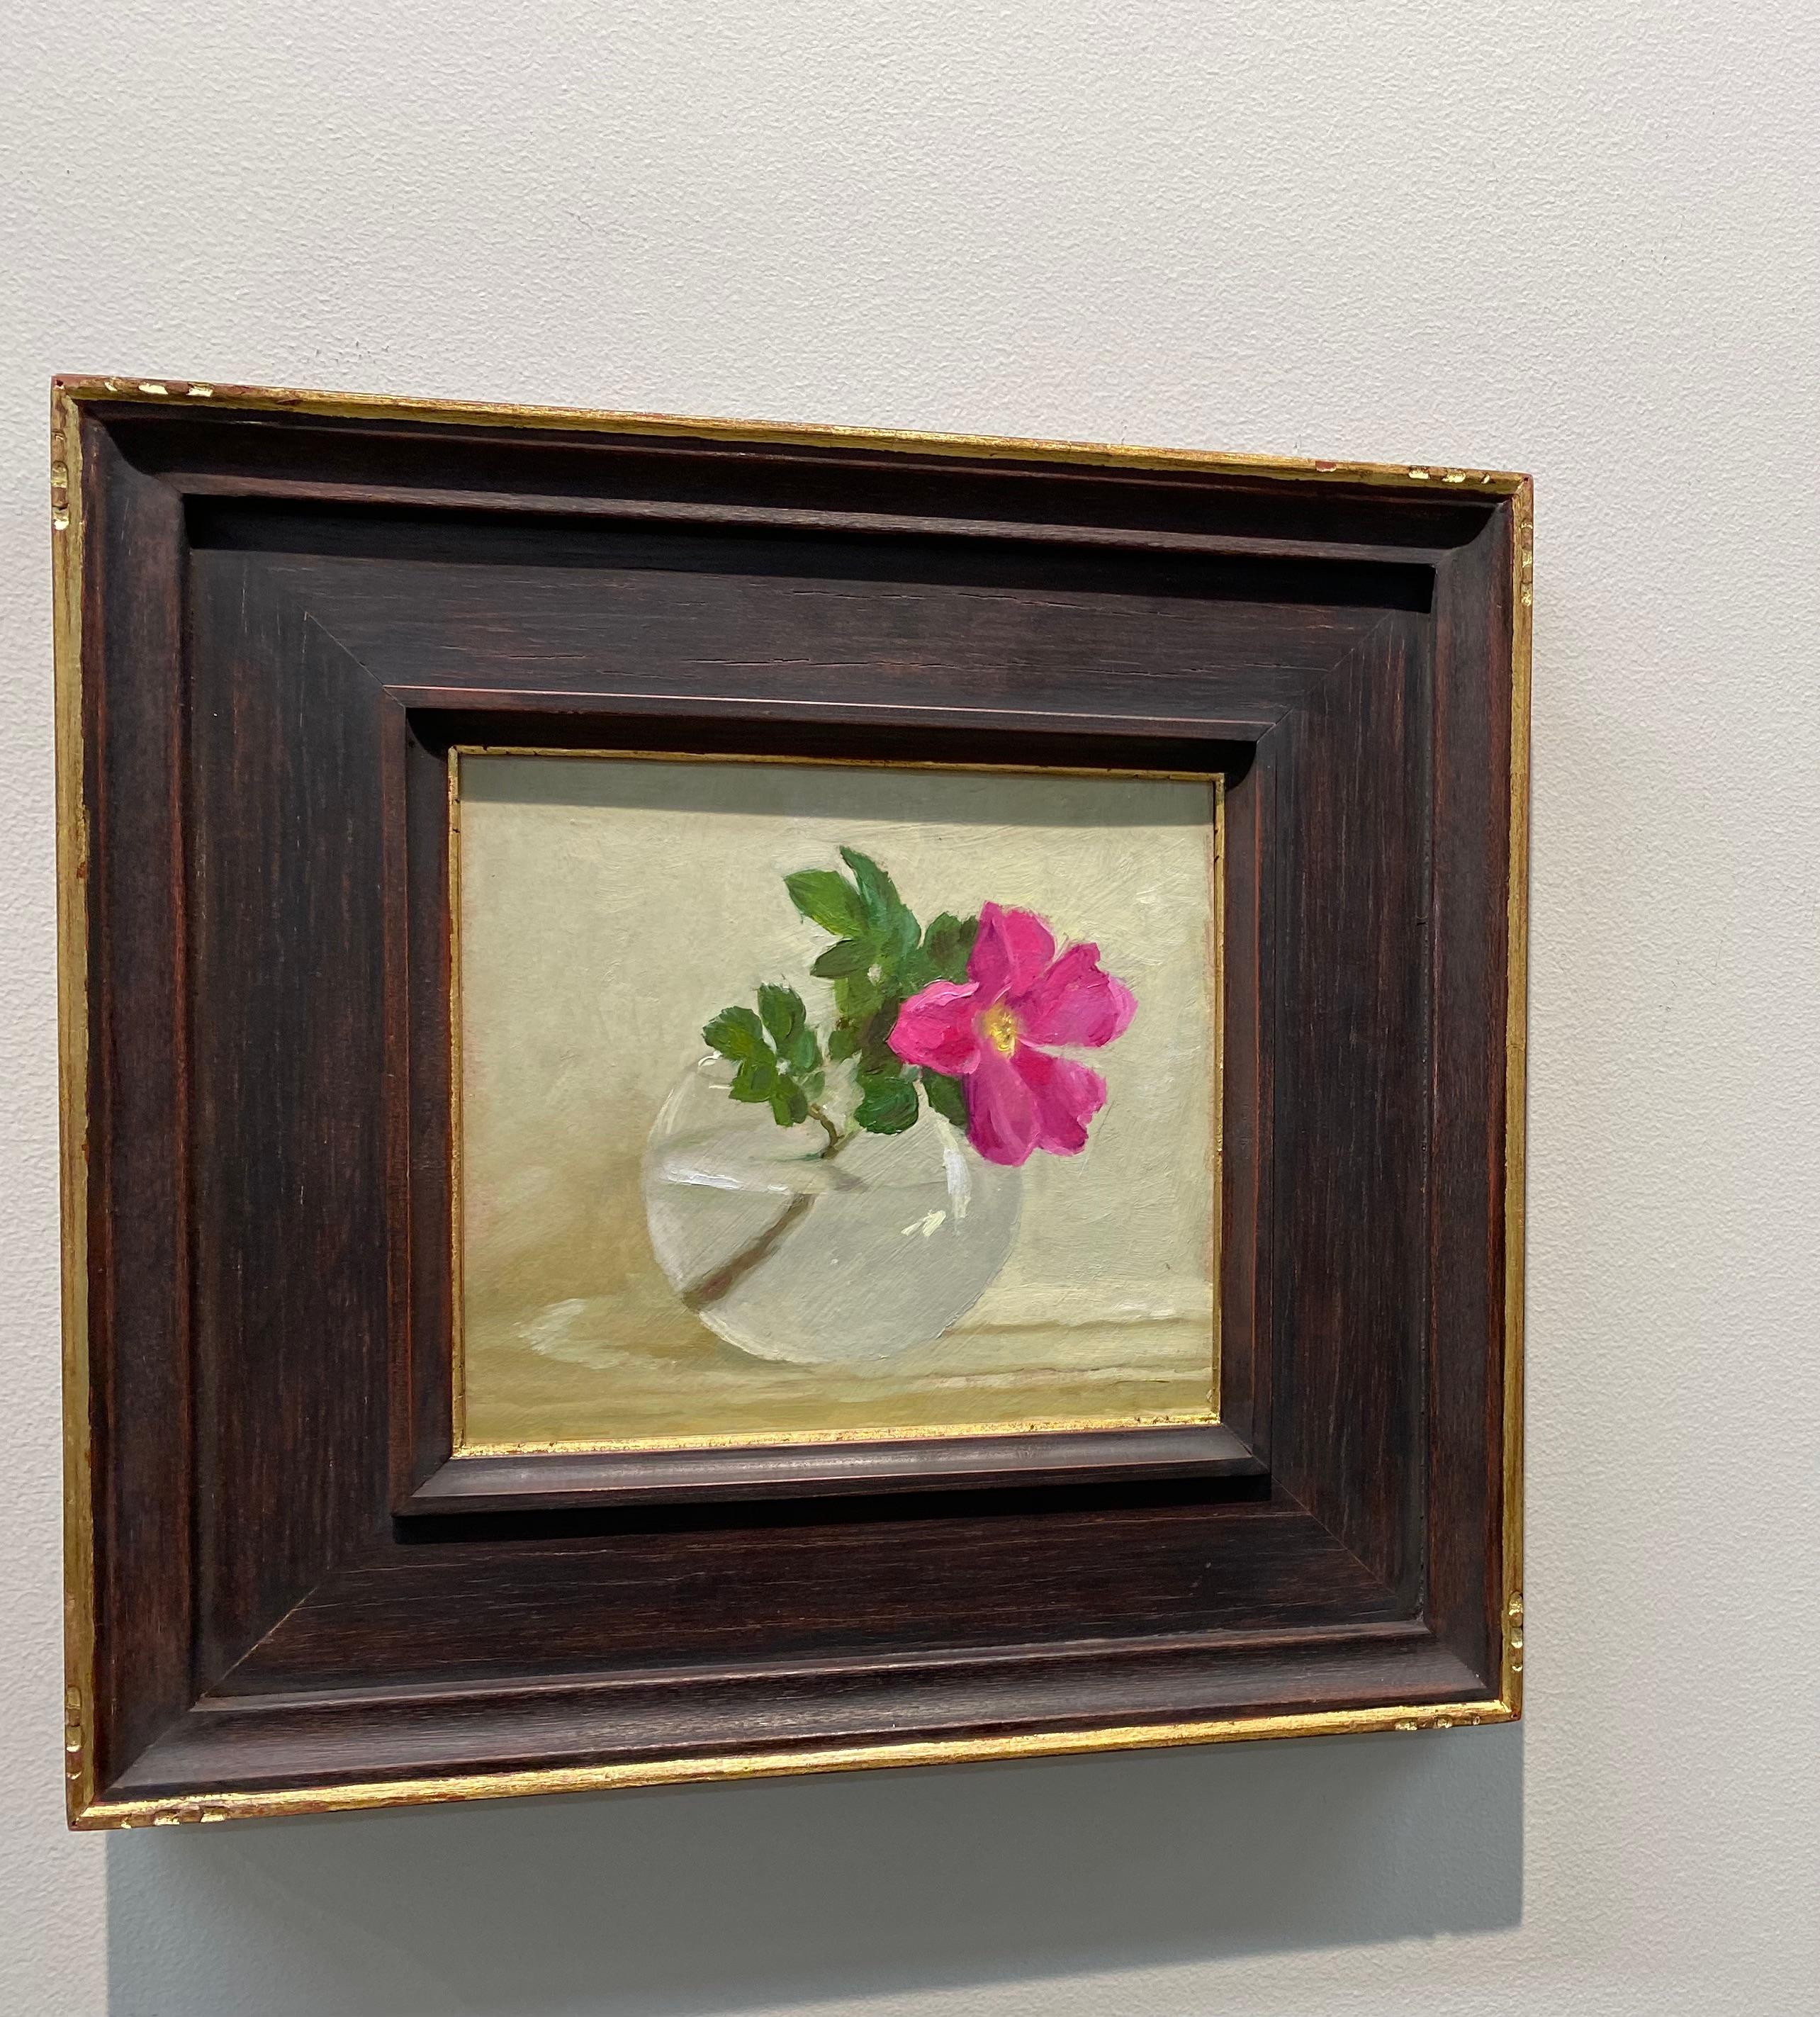 Rosehip-21st Century Still-life Painting of a Glass Bowl with Pink Rosehips - Gray Still-Life Painting by Ksenya Istomina